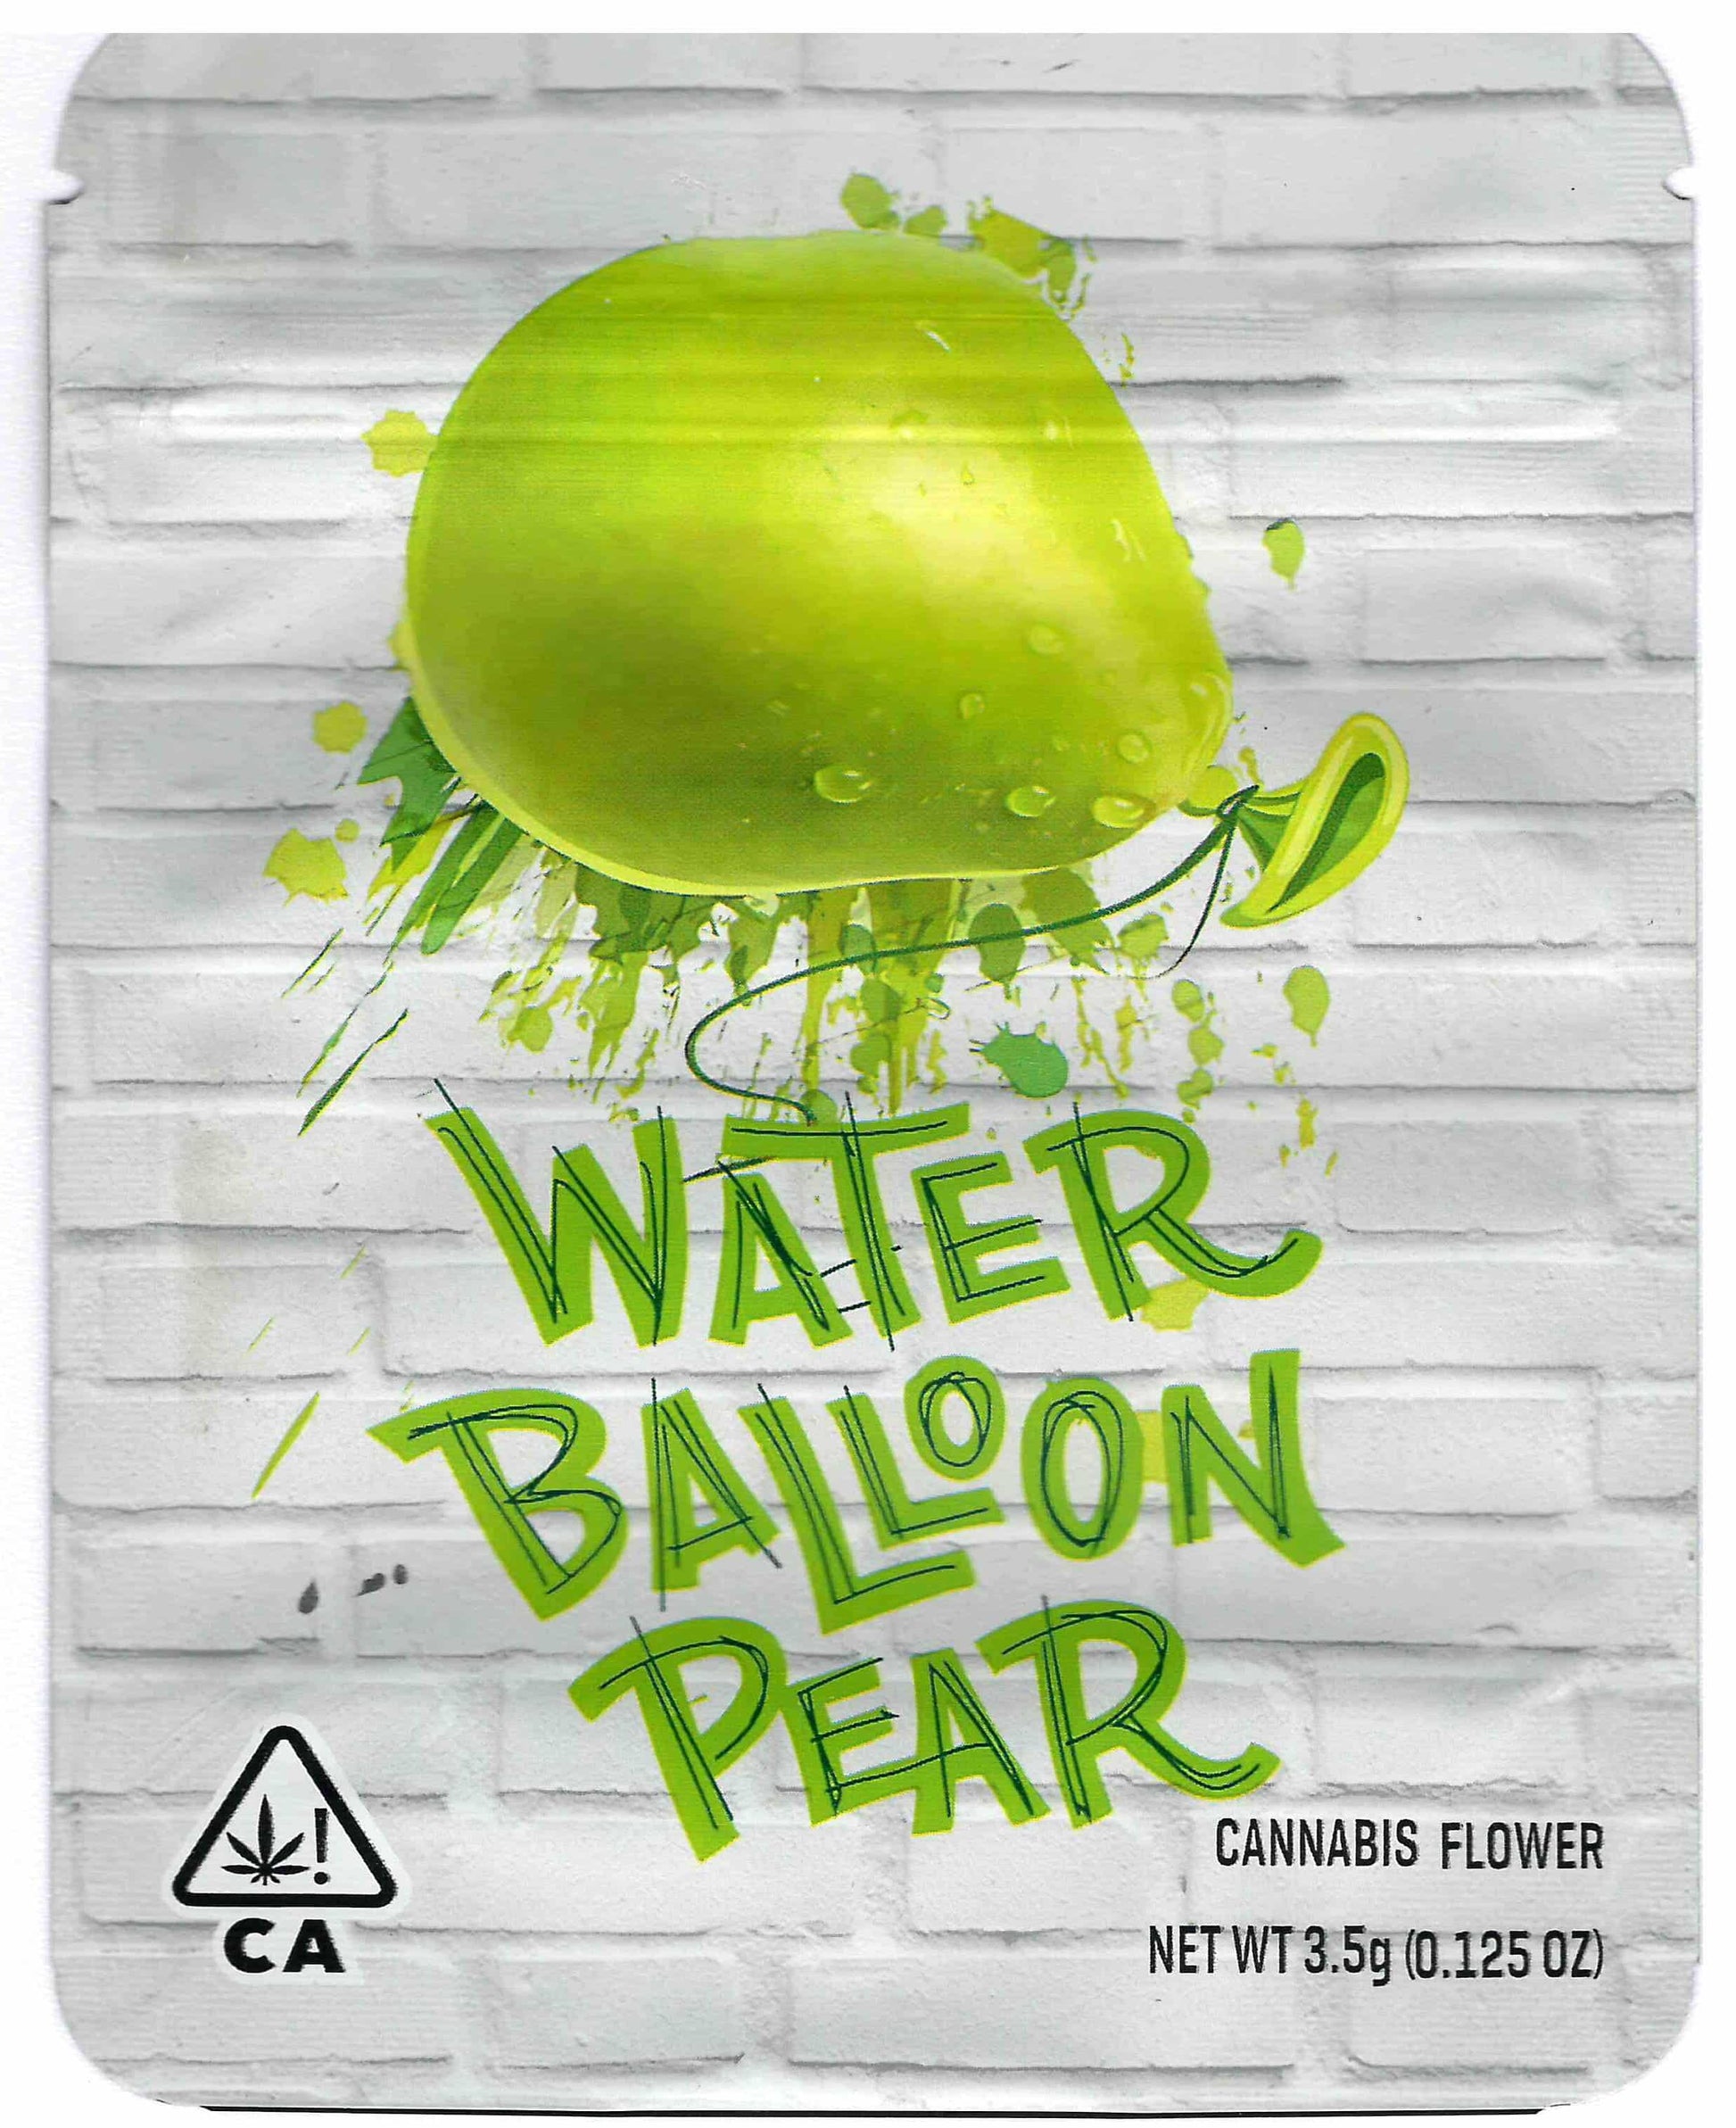 Lemonnade Mylar Bags 3.5g - Water Balloon Pear